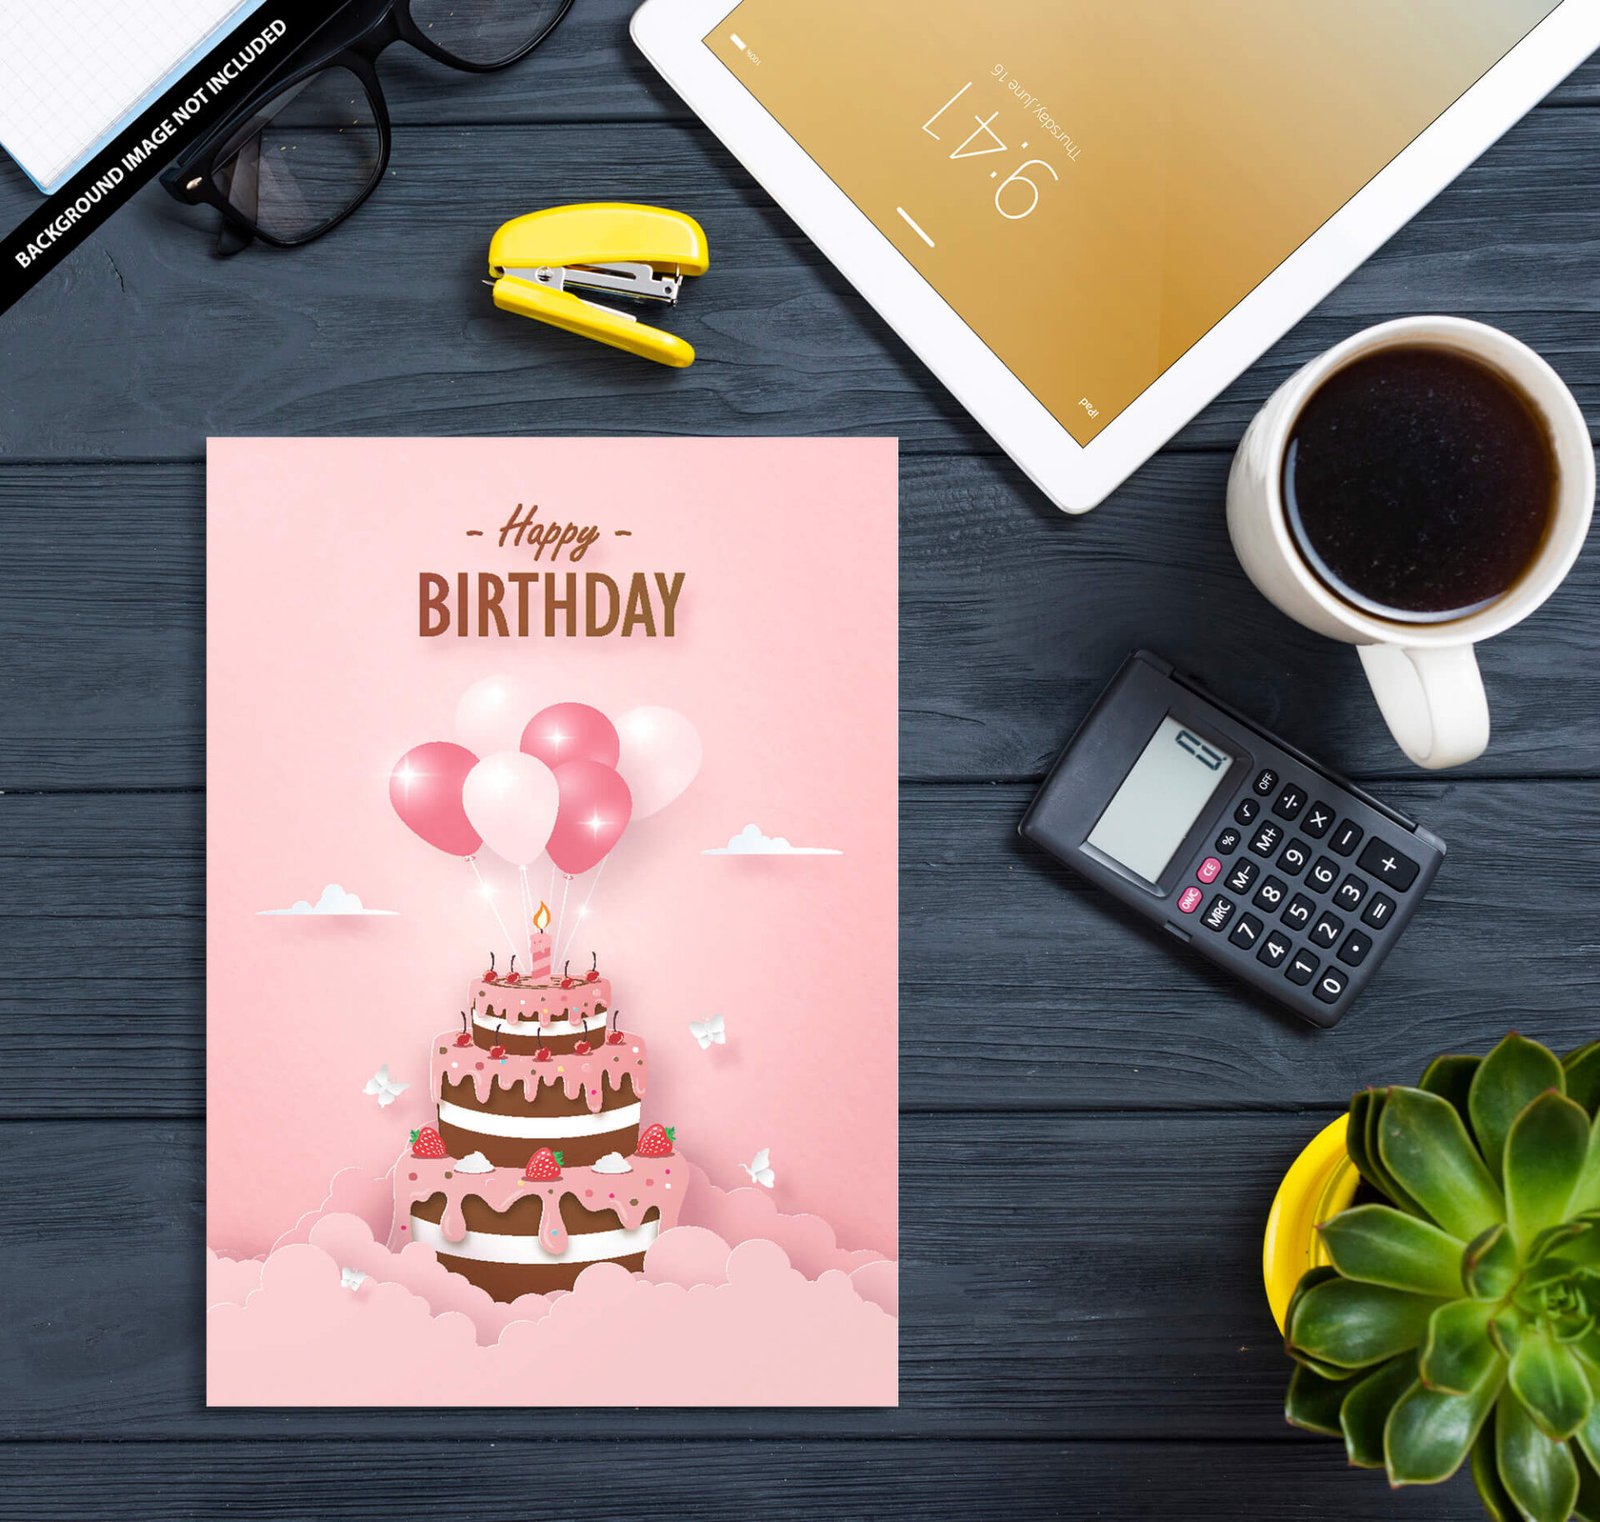 Download Free Birthday Card Mockup PSD Template | mockupden